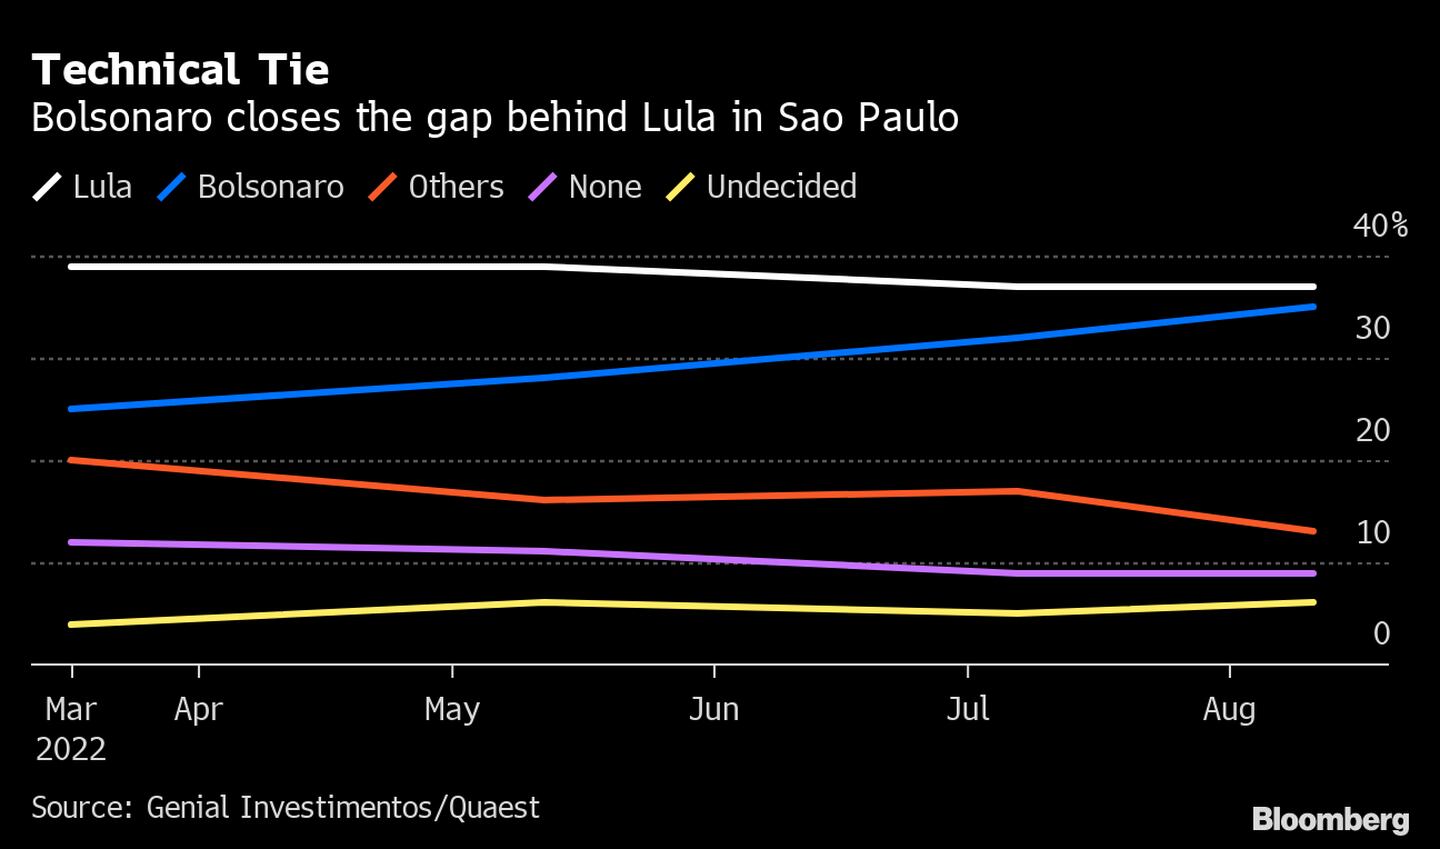 Bolsonaro reduce la brecha con Lula en São Paulo. dfd